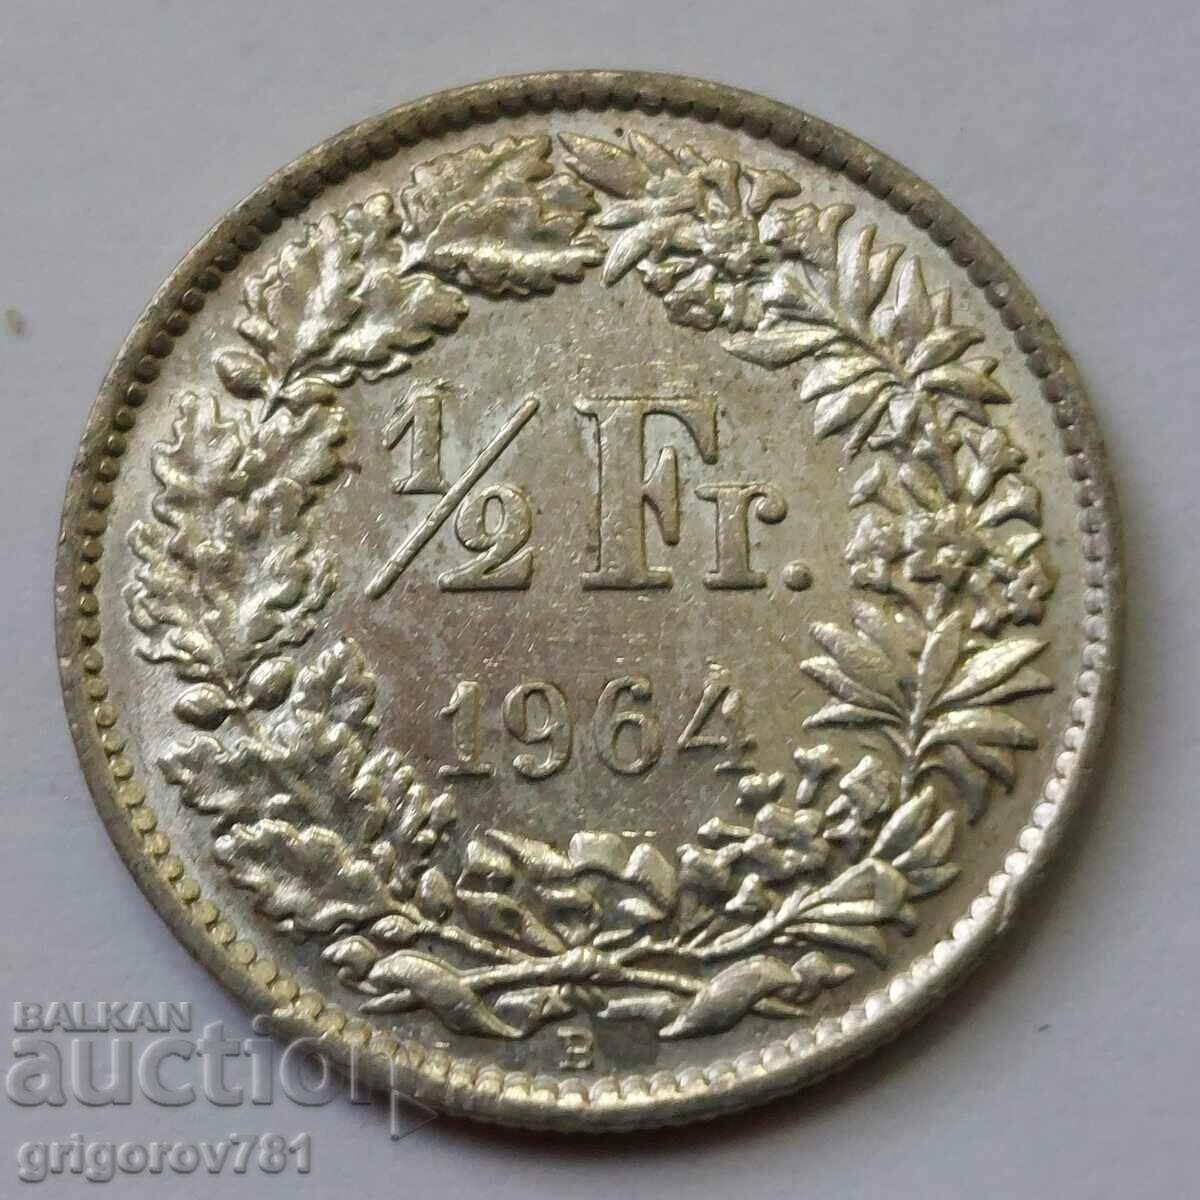 1/2 Franc Argint Elveția 1964 B - Monedă de argint #14